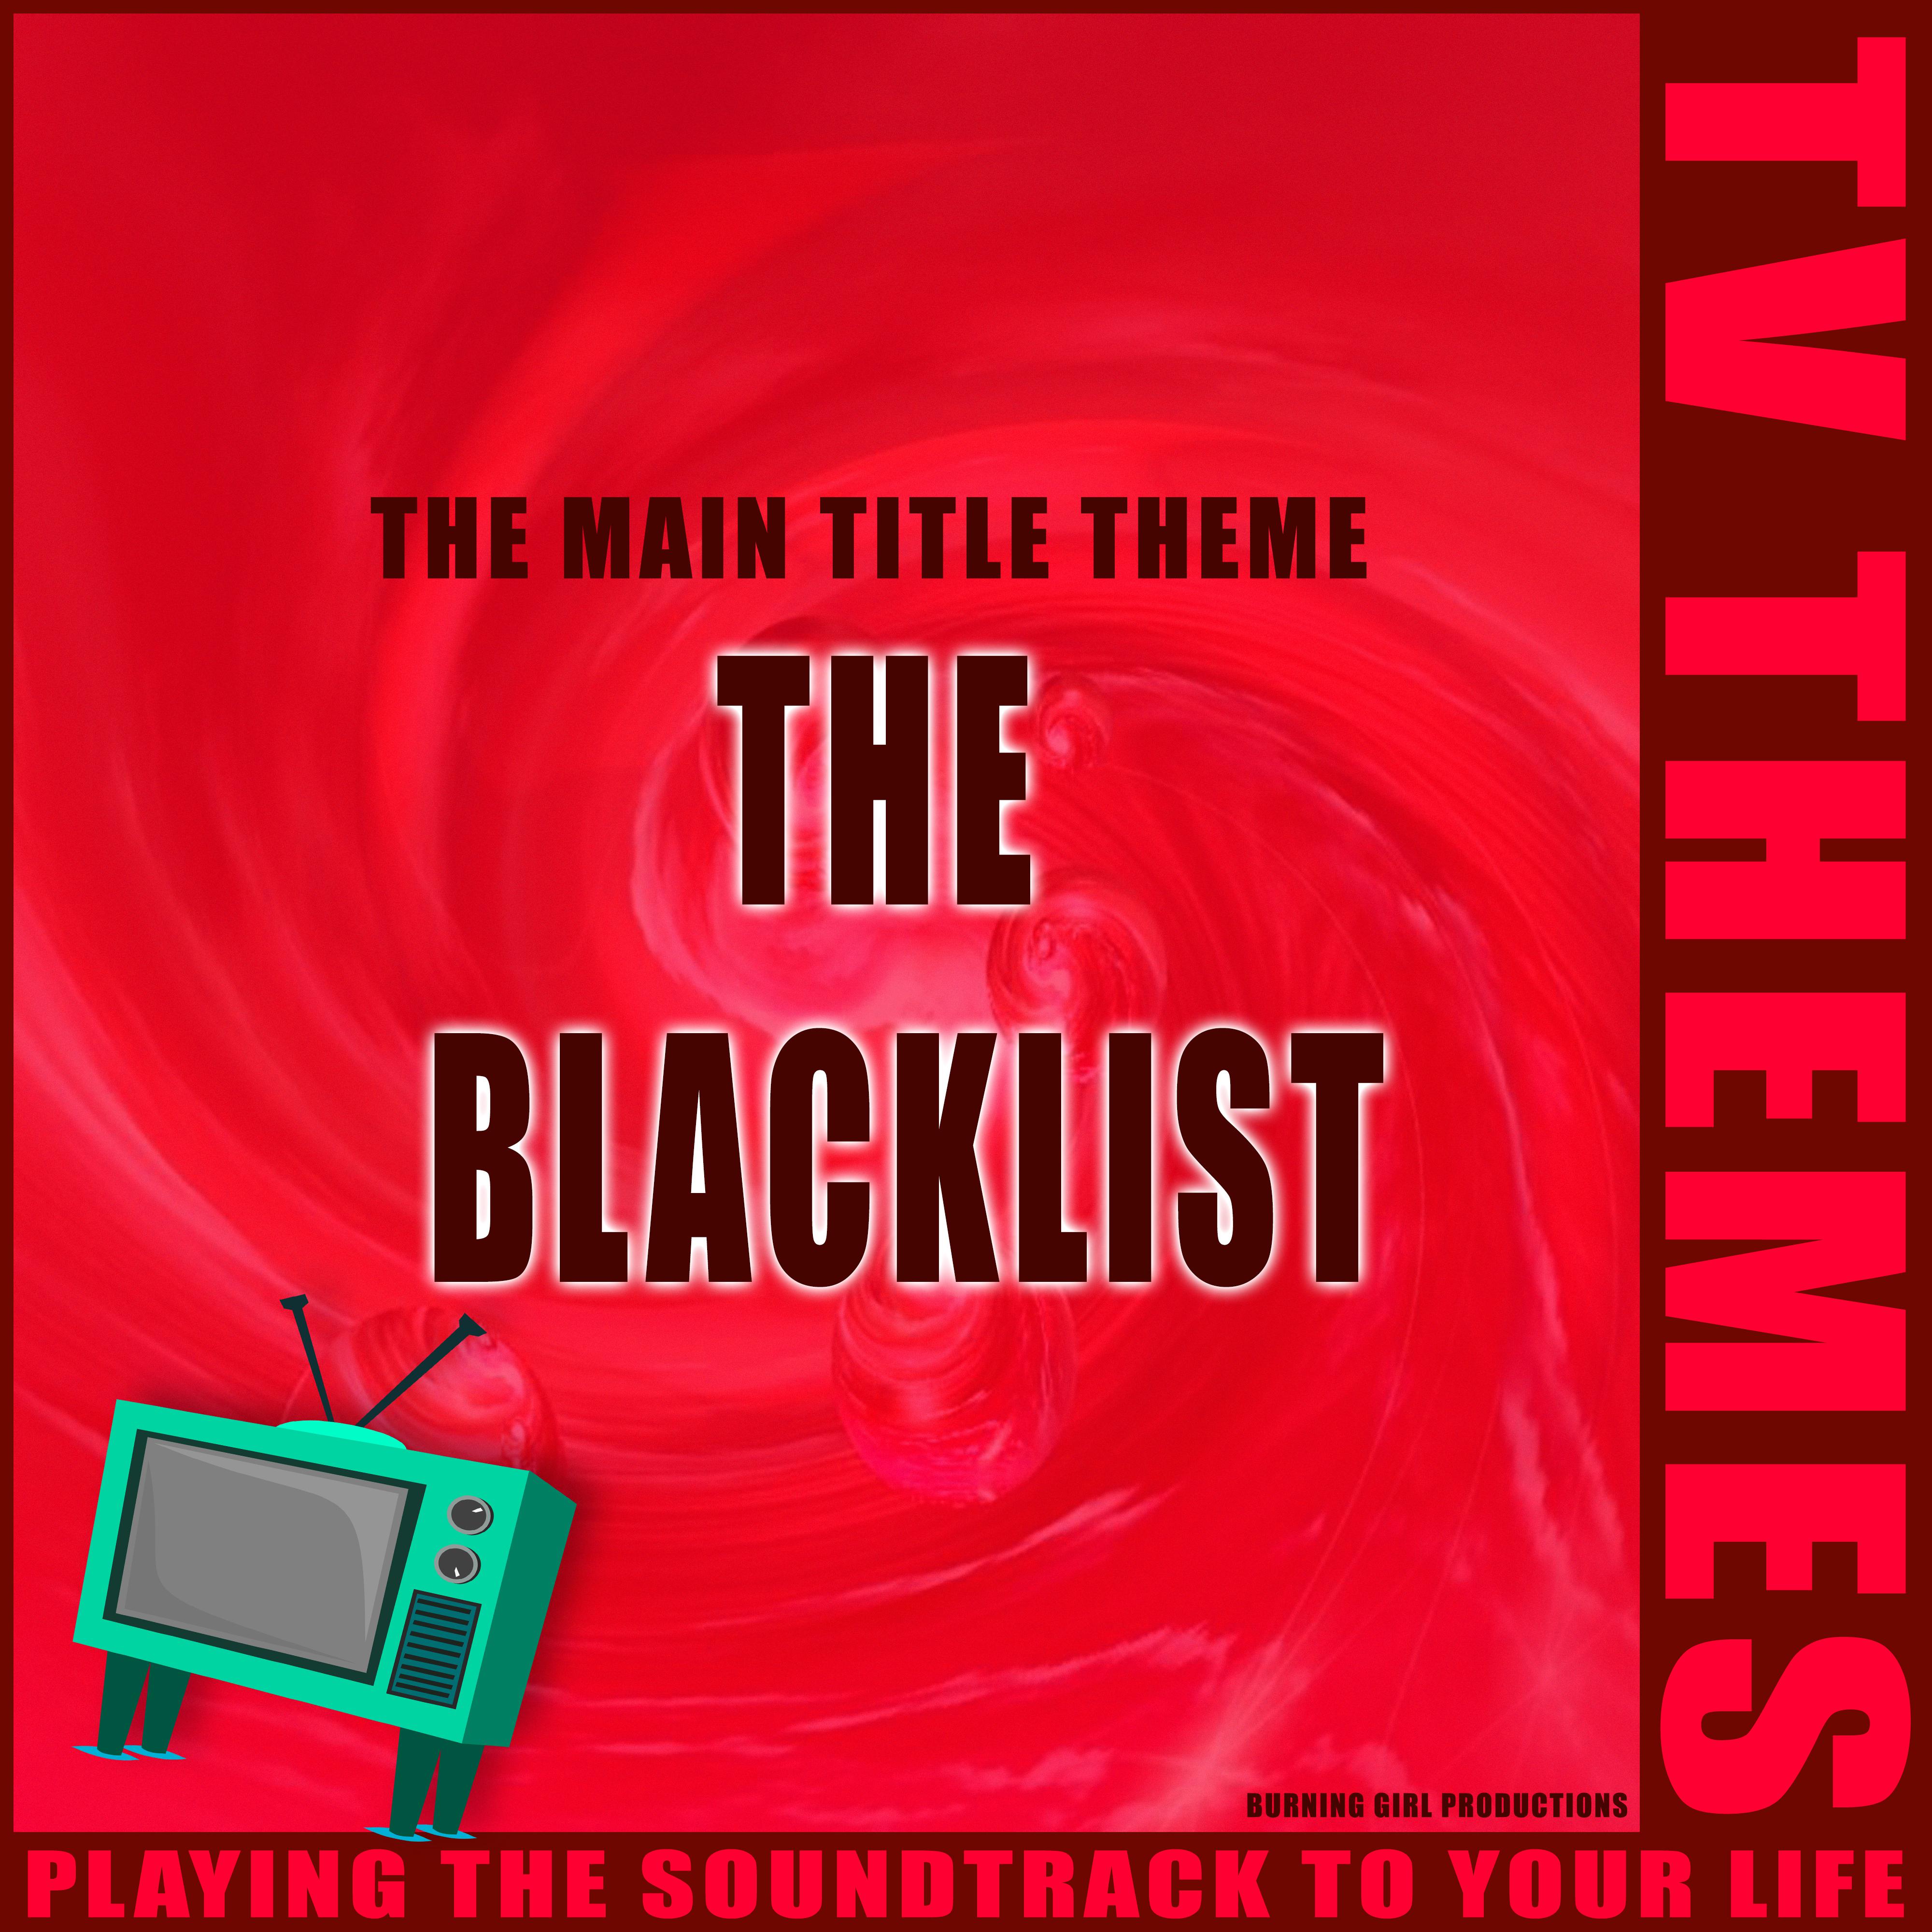 The Blacklist - The Main Title Theme